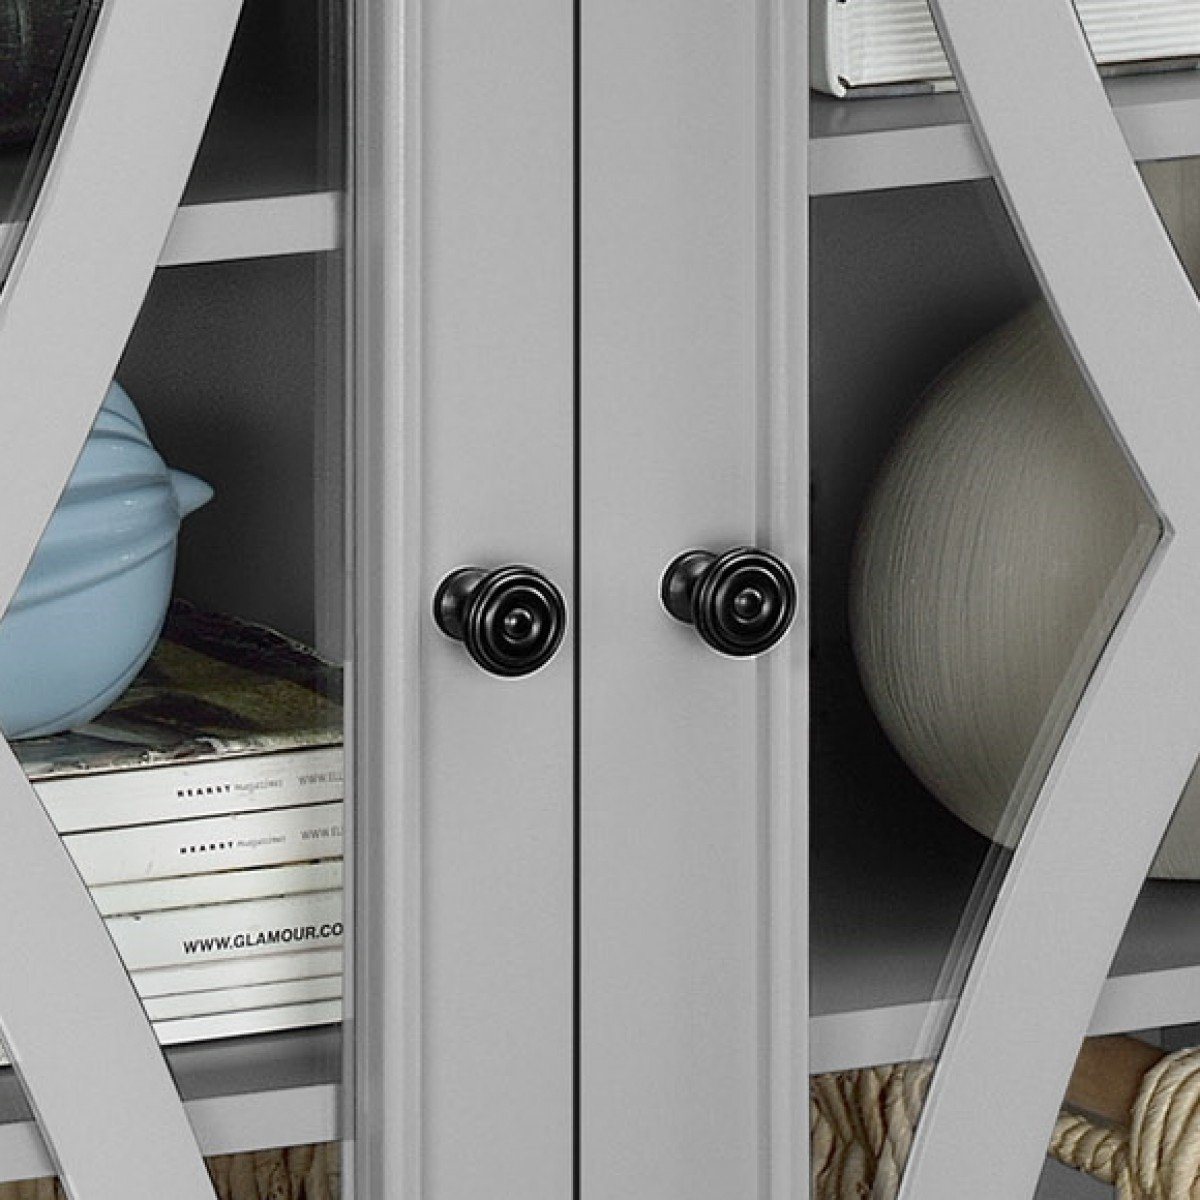 Dorel Home Ellington Range Accent Cabinet in Grey